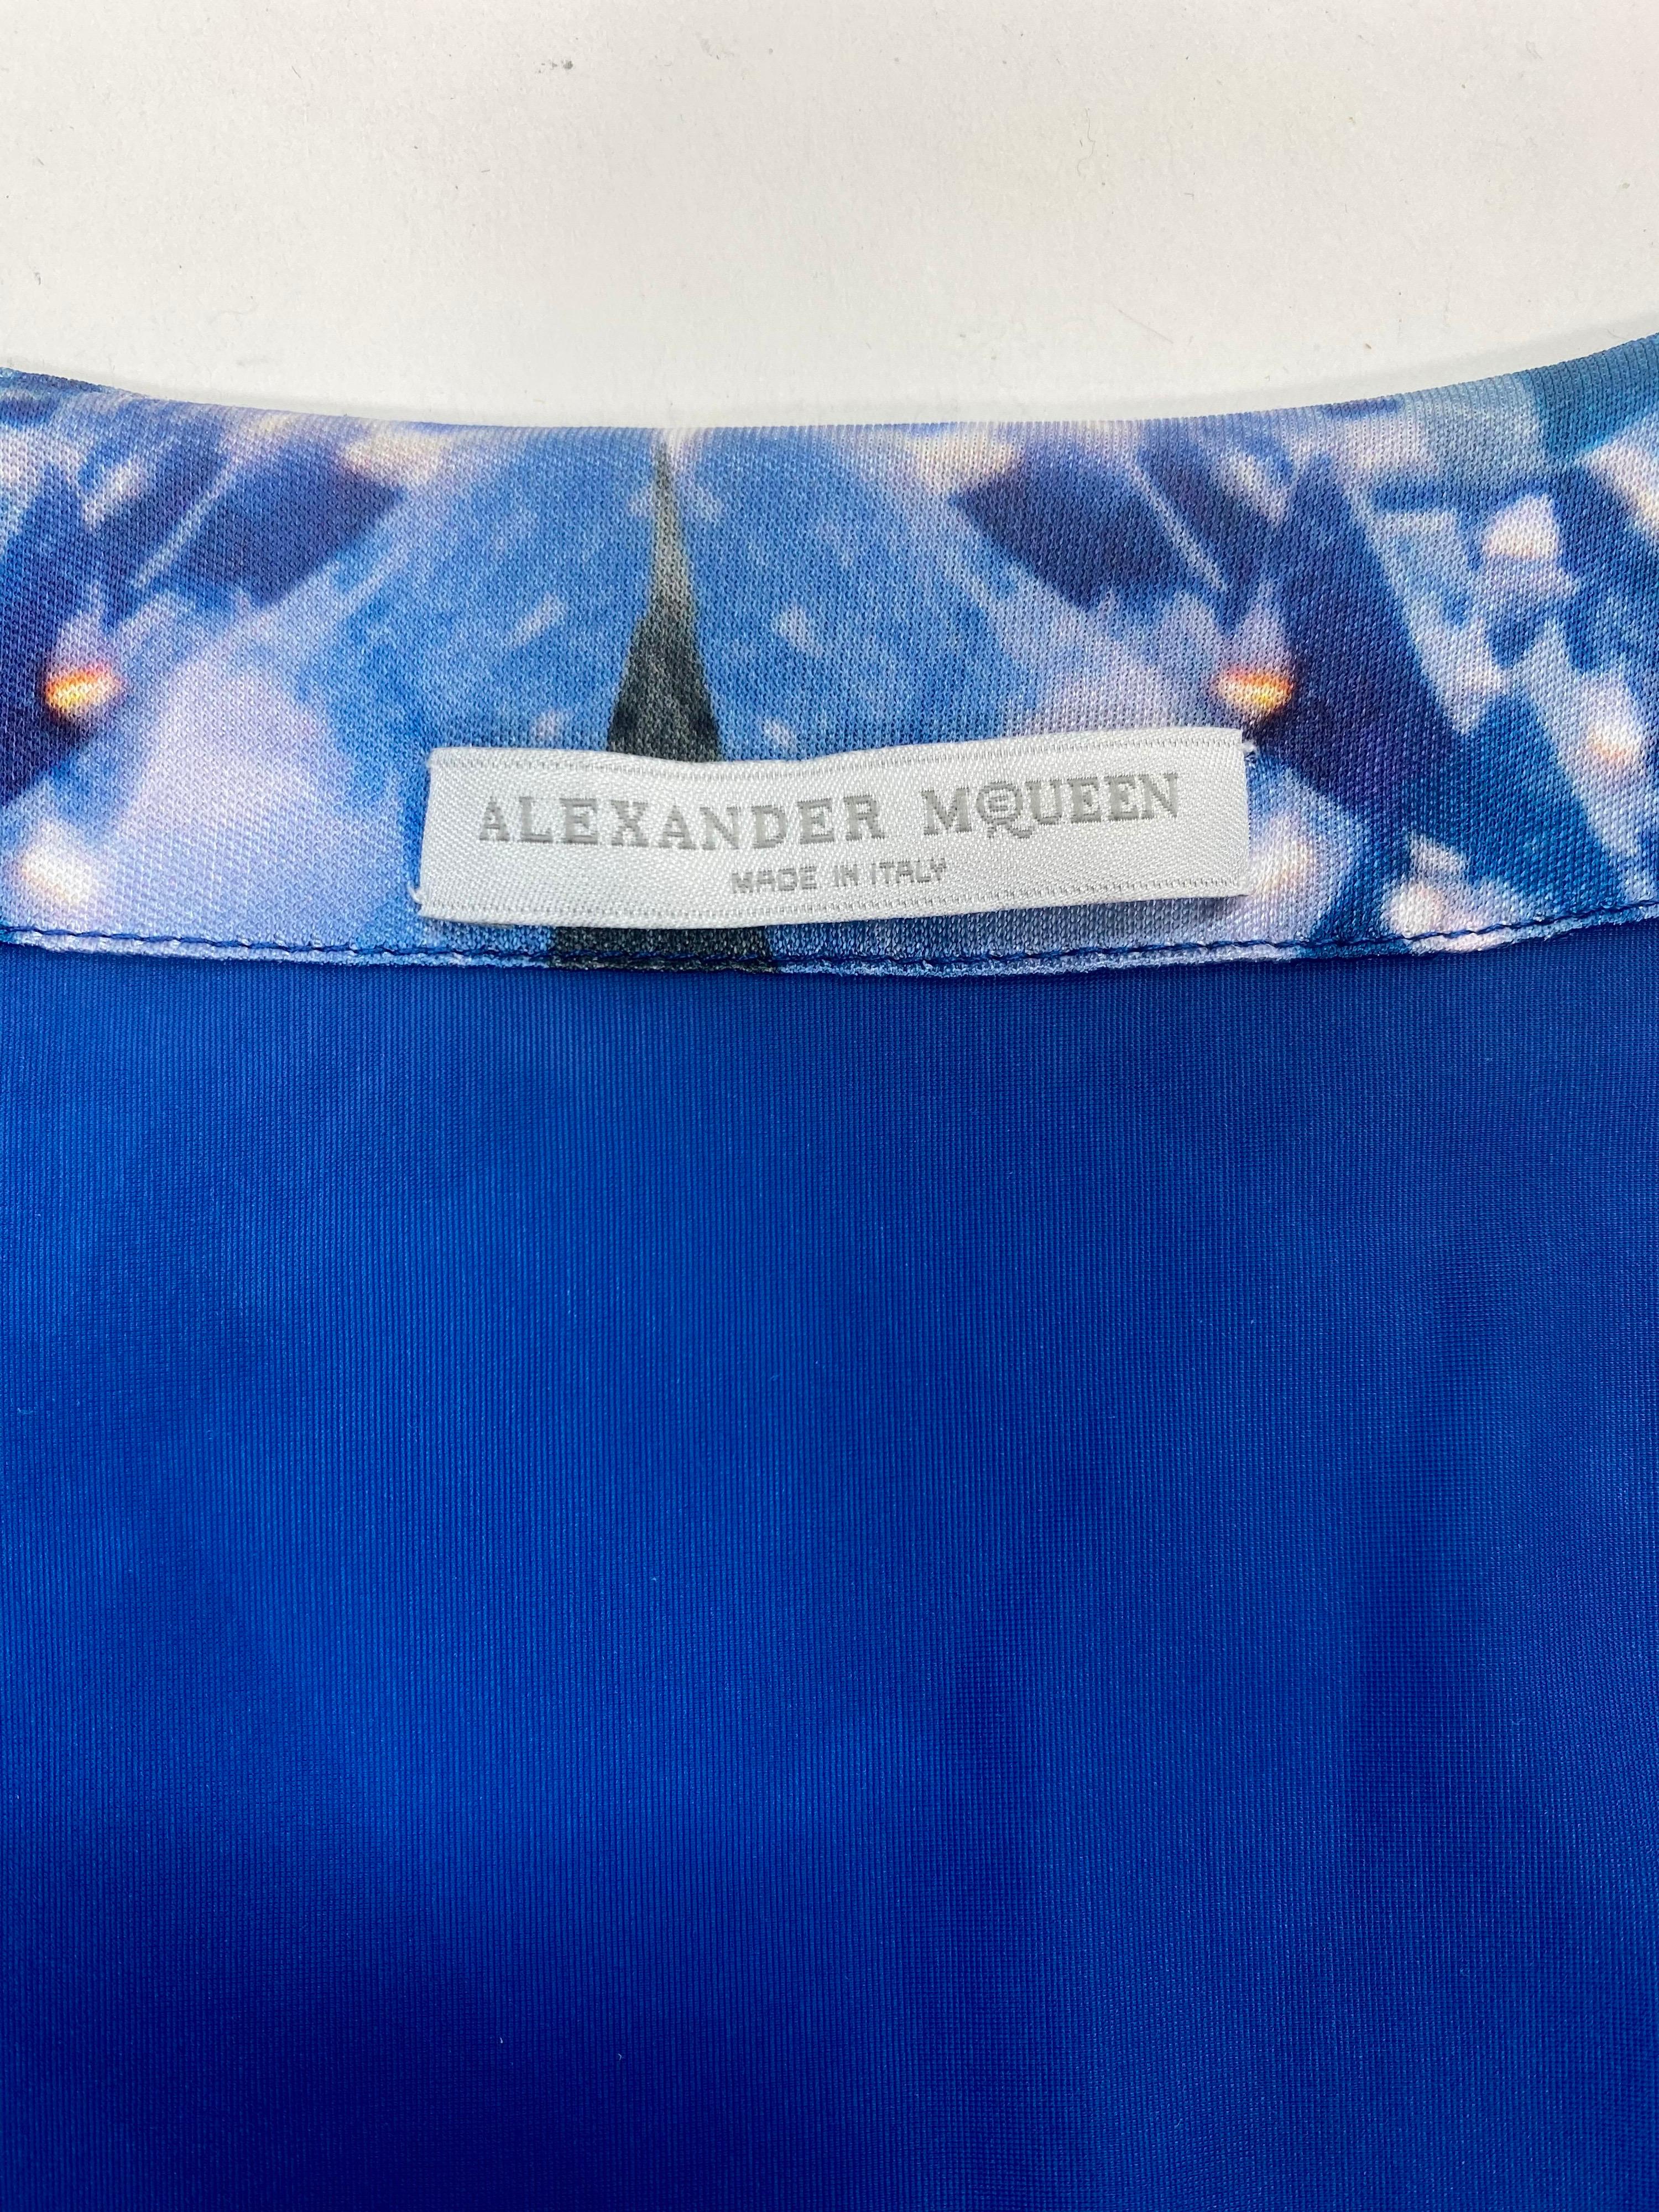 Vintage Alexander McQueen Kaleidoscope Print Tunic Dress  4